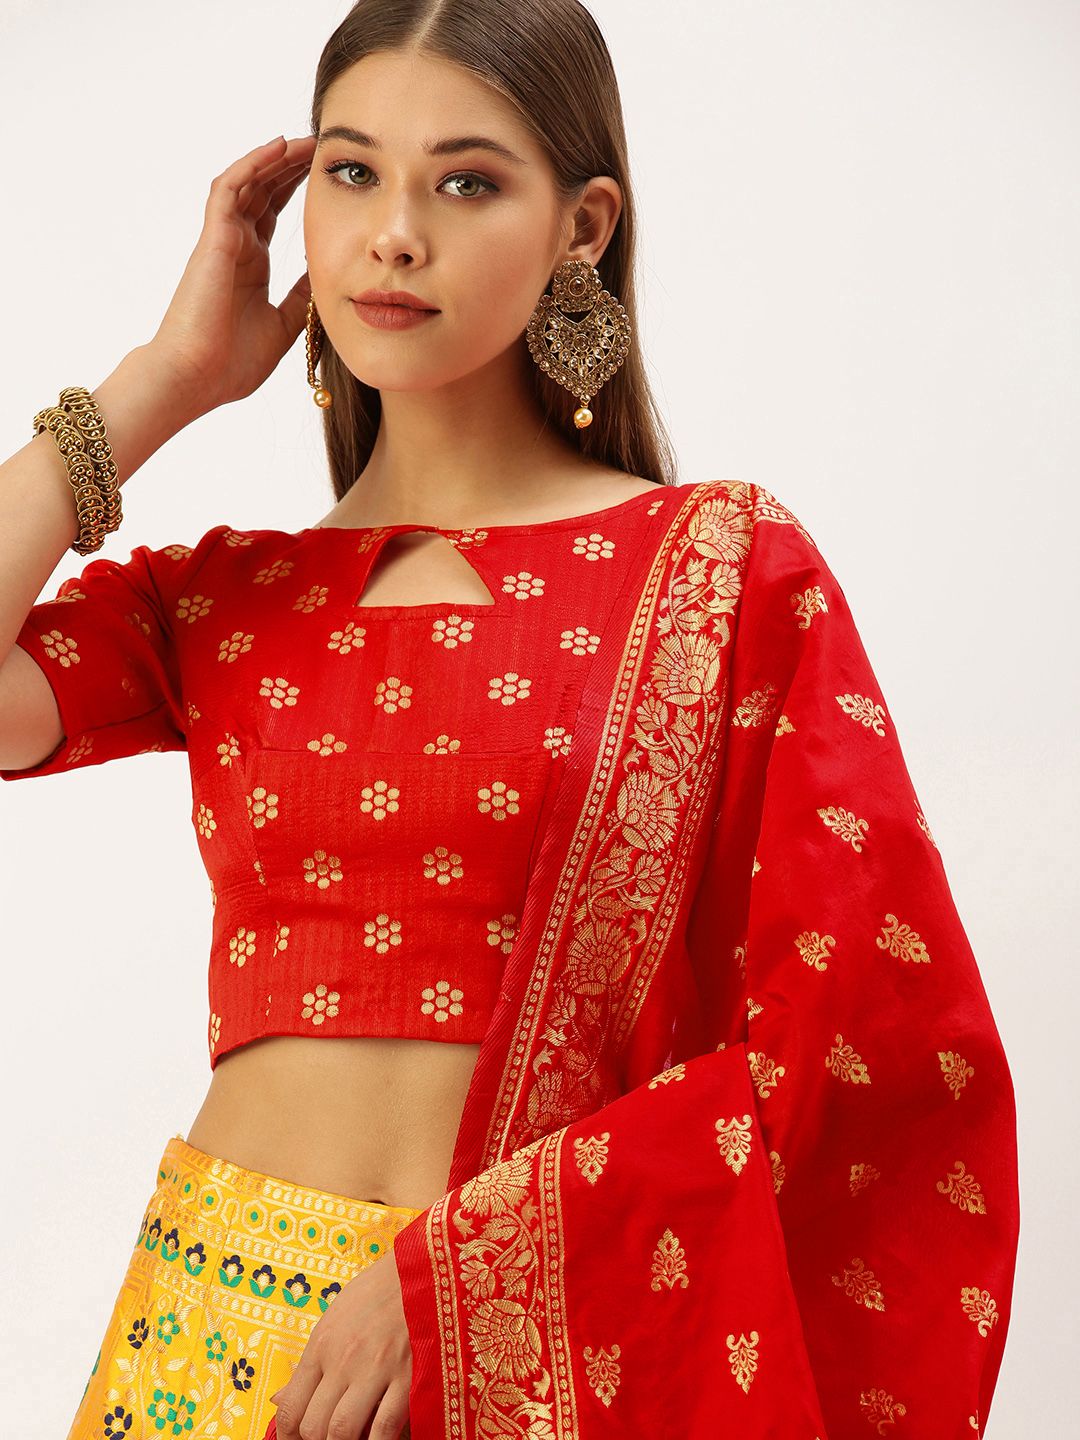 Pandadi Saree Yellow & Red Semi-Stitched Lehenga & Unstitched Blouse With Dupatta Price in India